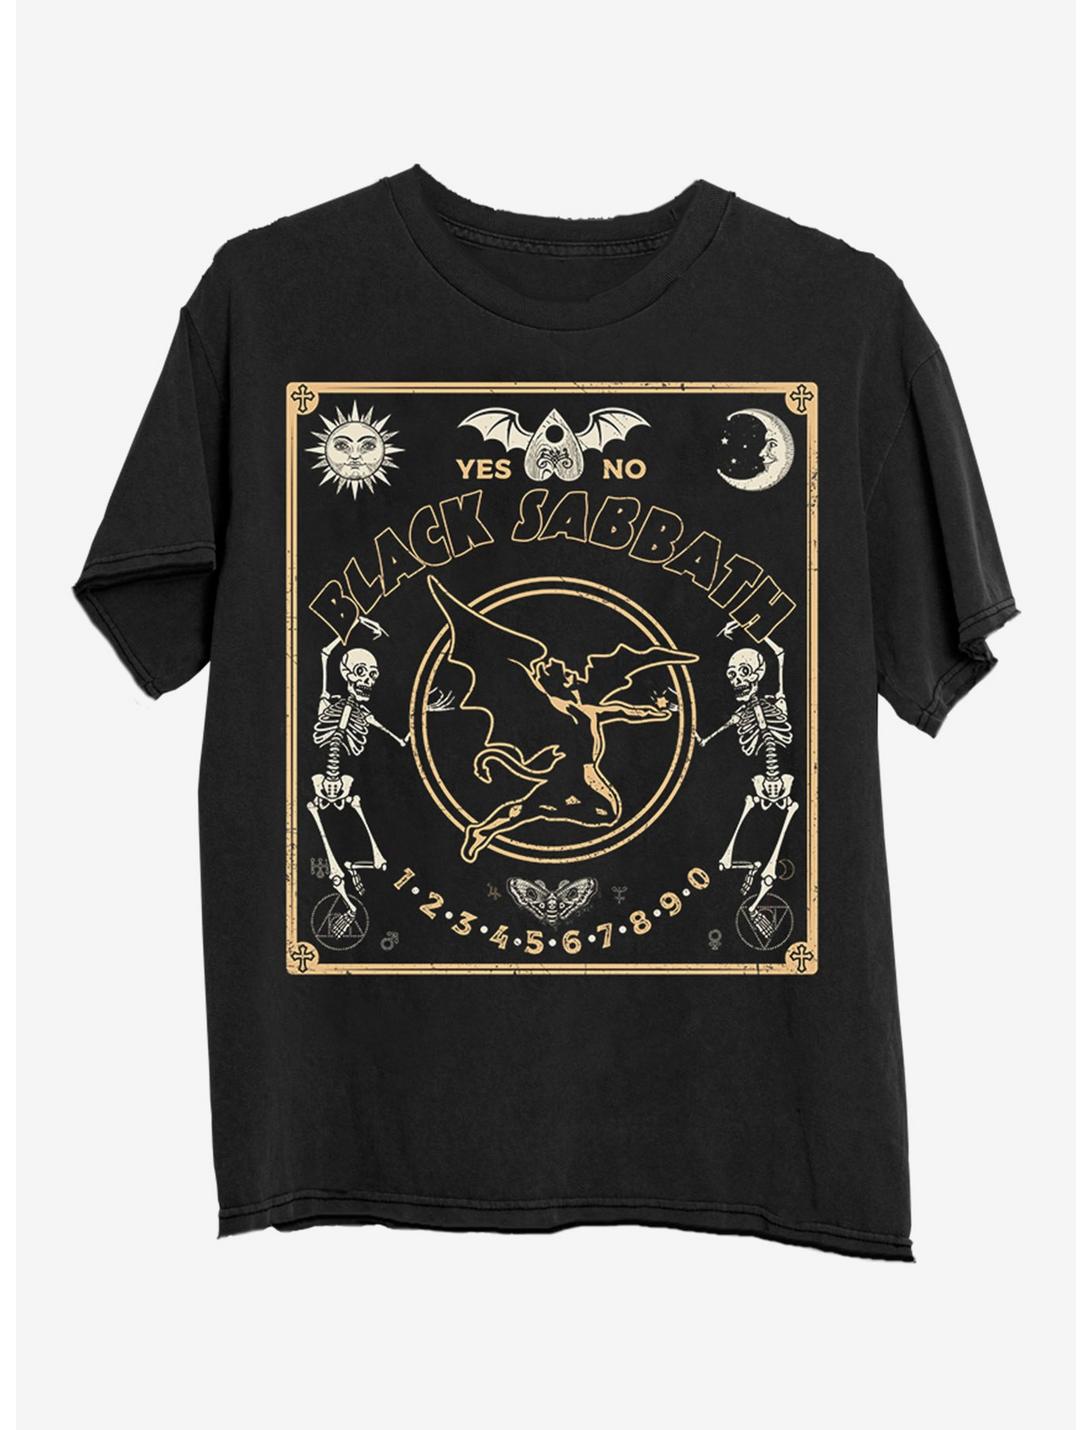 Black Sabbath Spirit Board Girls T-Shirt, BLACK, hi-res